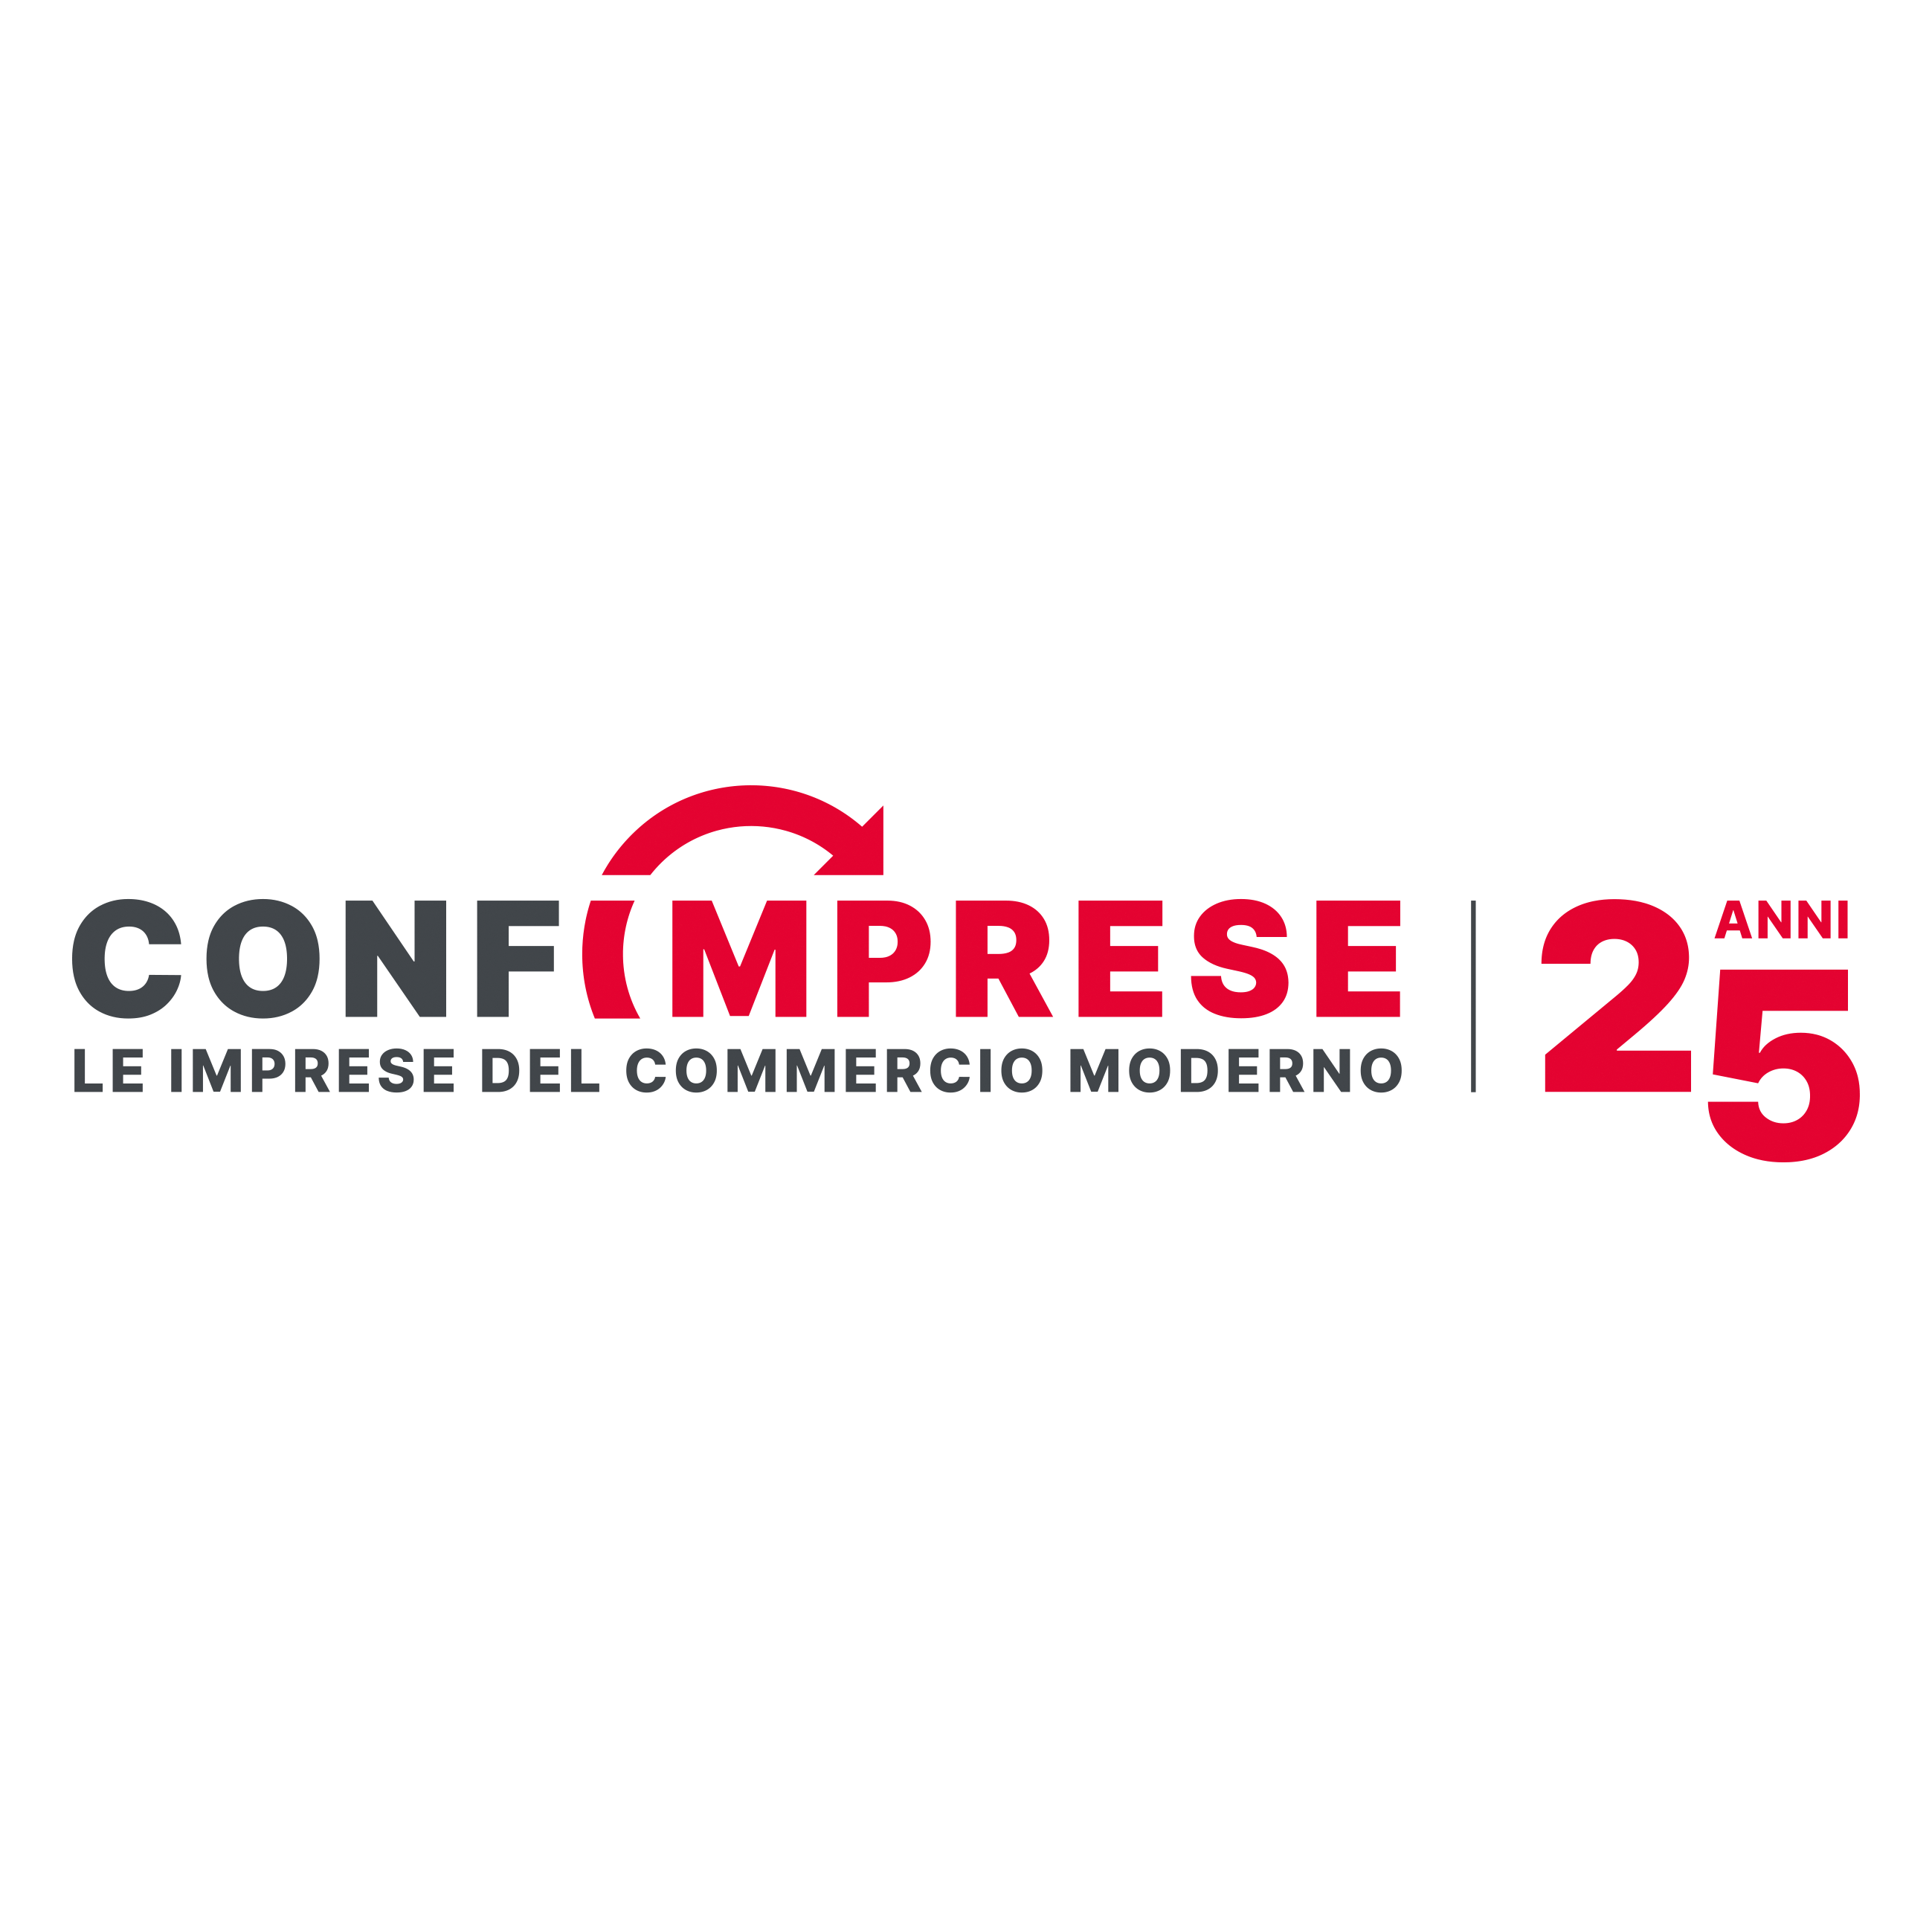 Logo Confimprese 25 | Digital Innovation Days